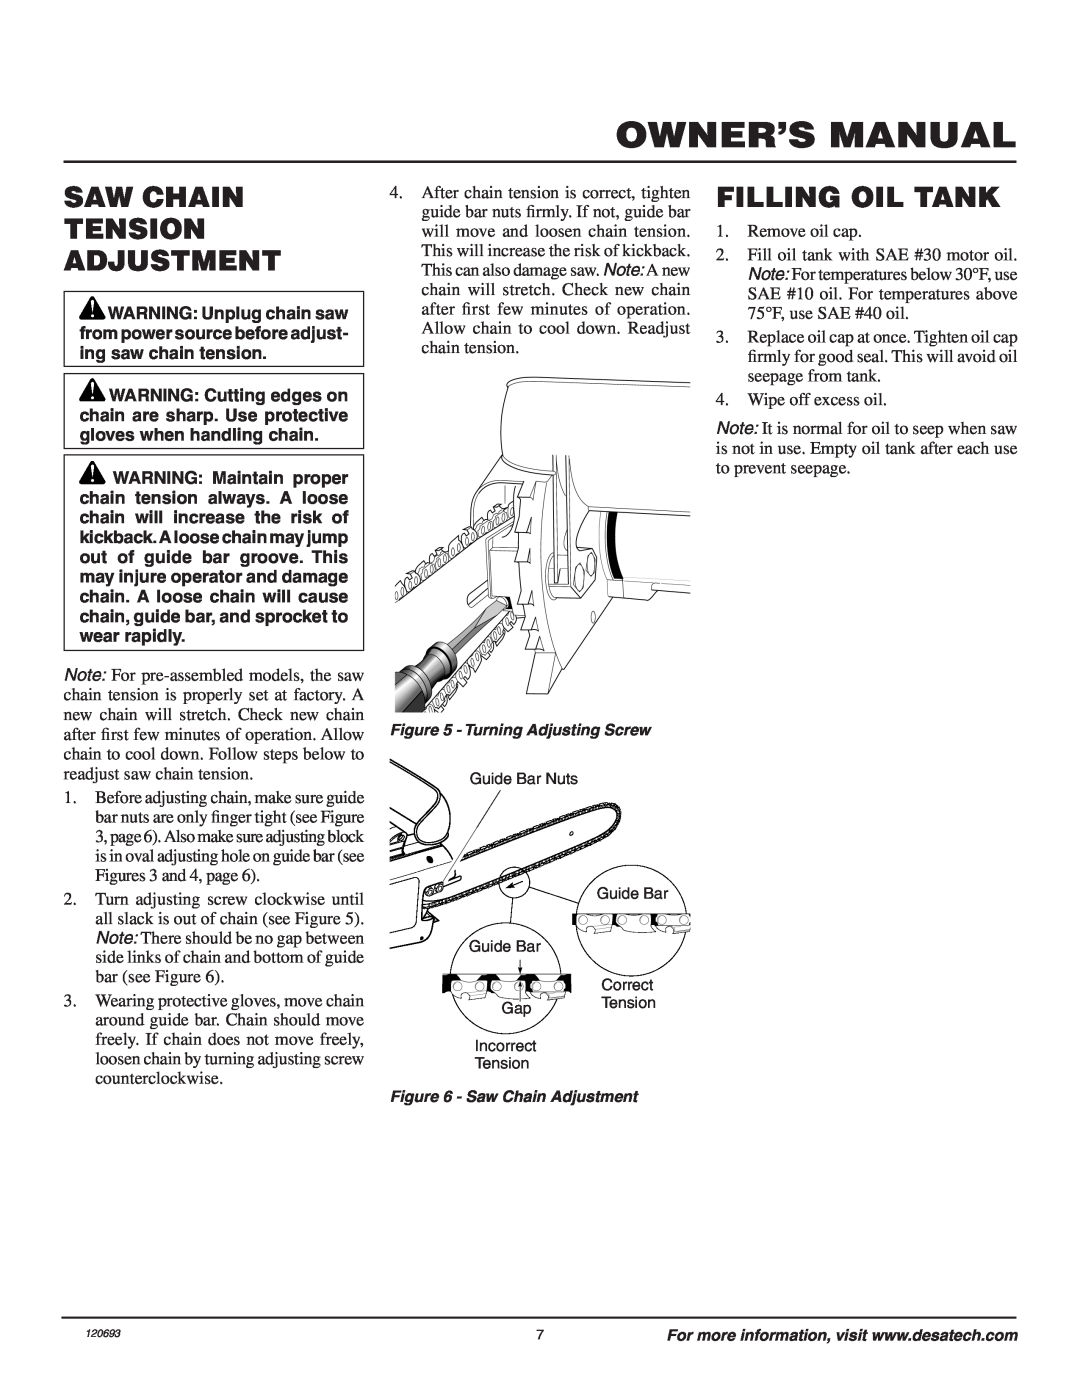 Homelite UT13130 owner manual Saw Chain Tension Adjustment, Filling Oil Tank 